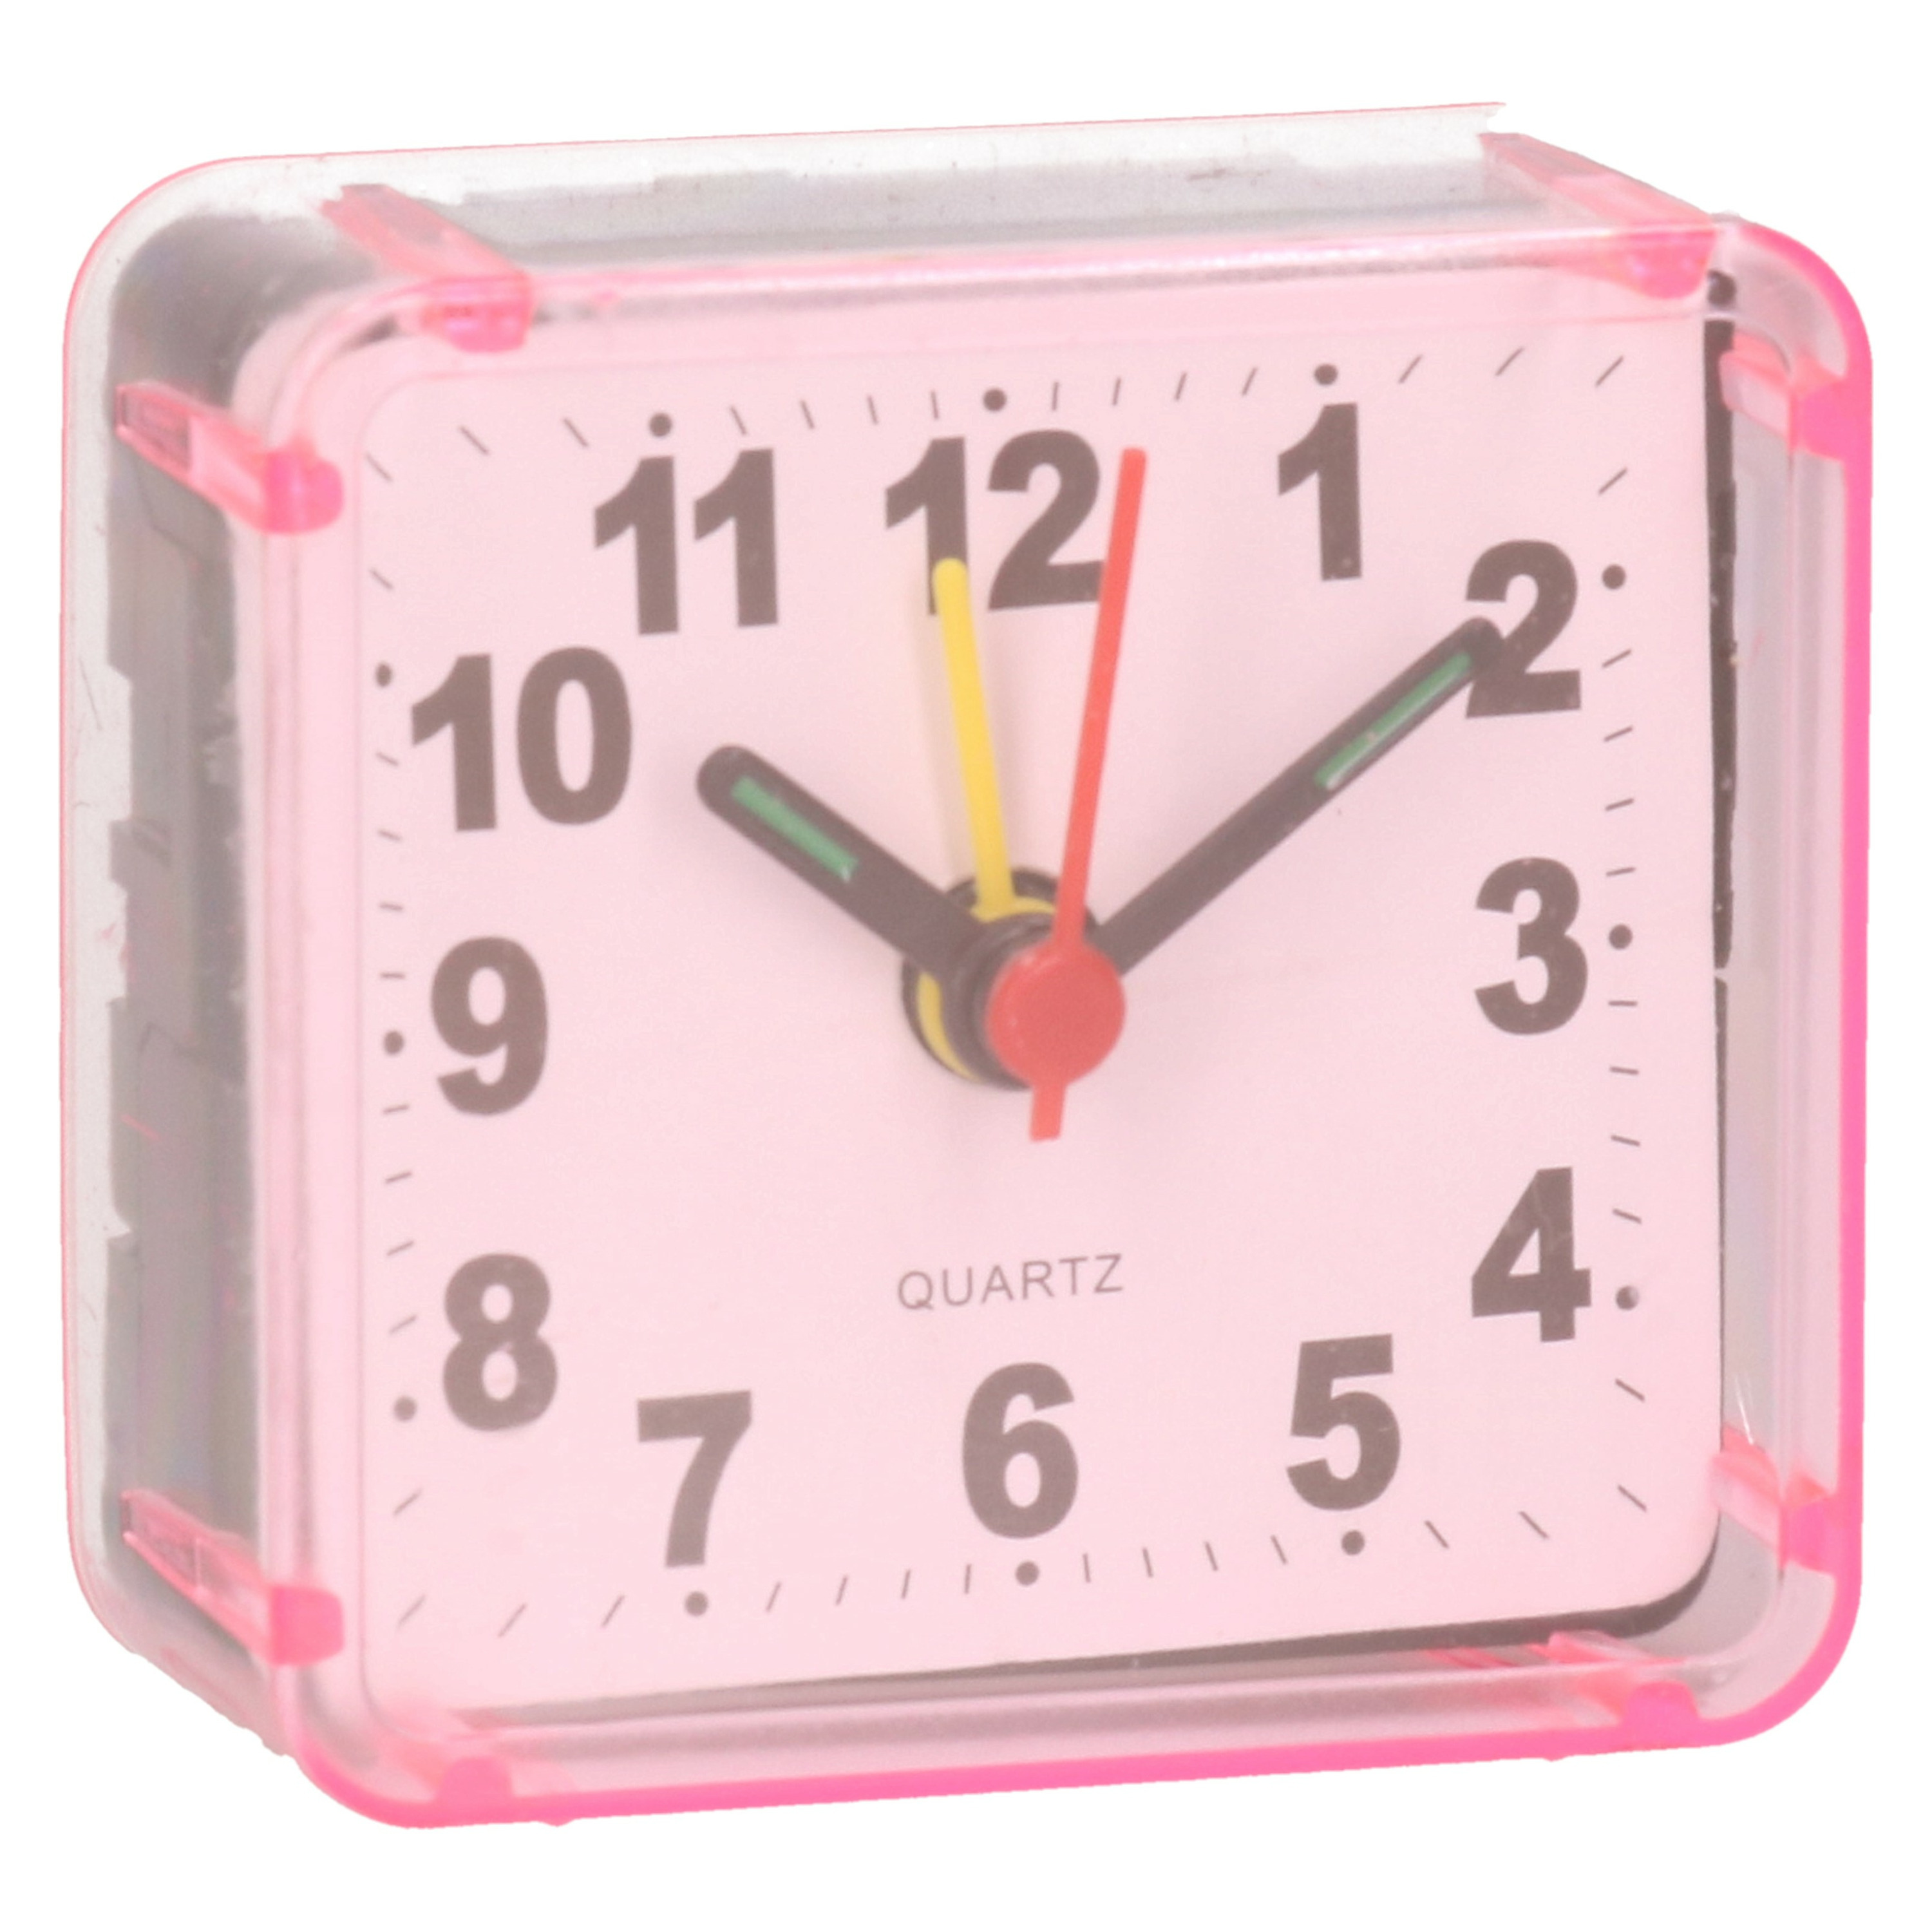 Reiswekker-alarmklok analoog roze kunststof 6 x 3 cm klein model